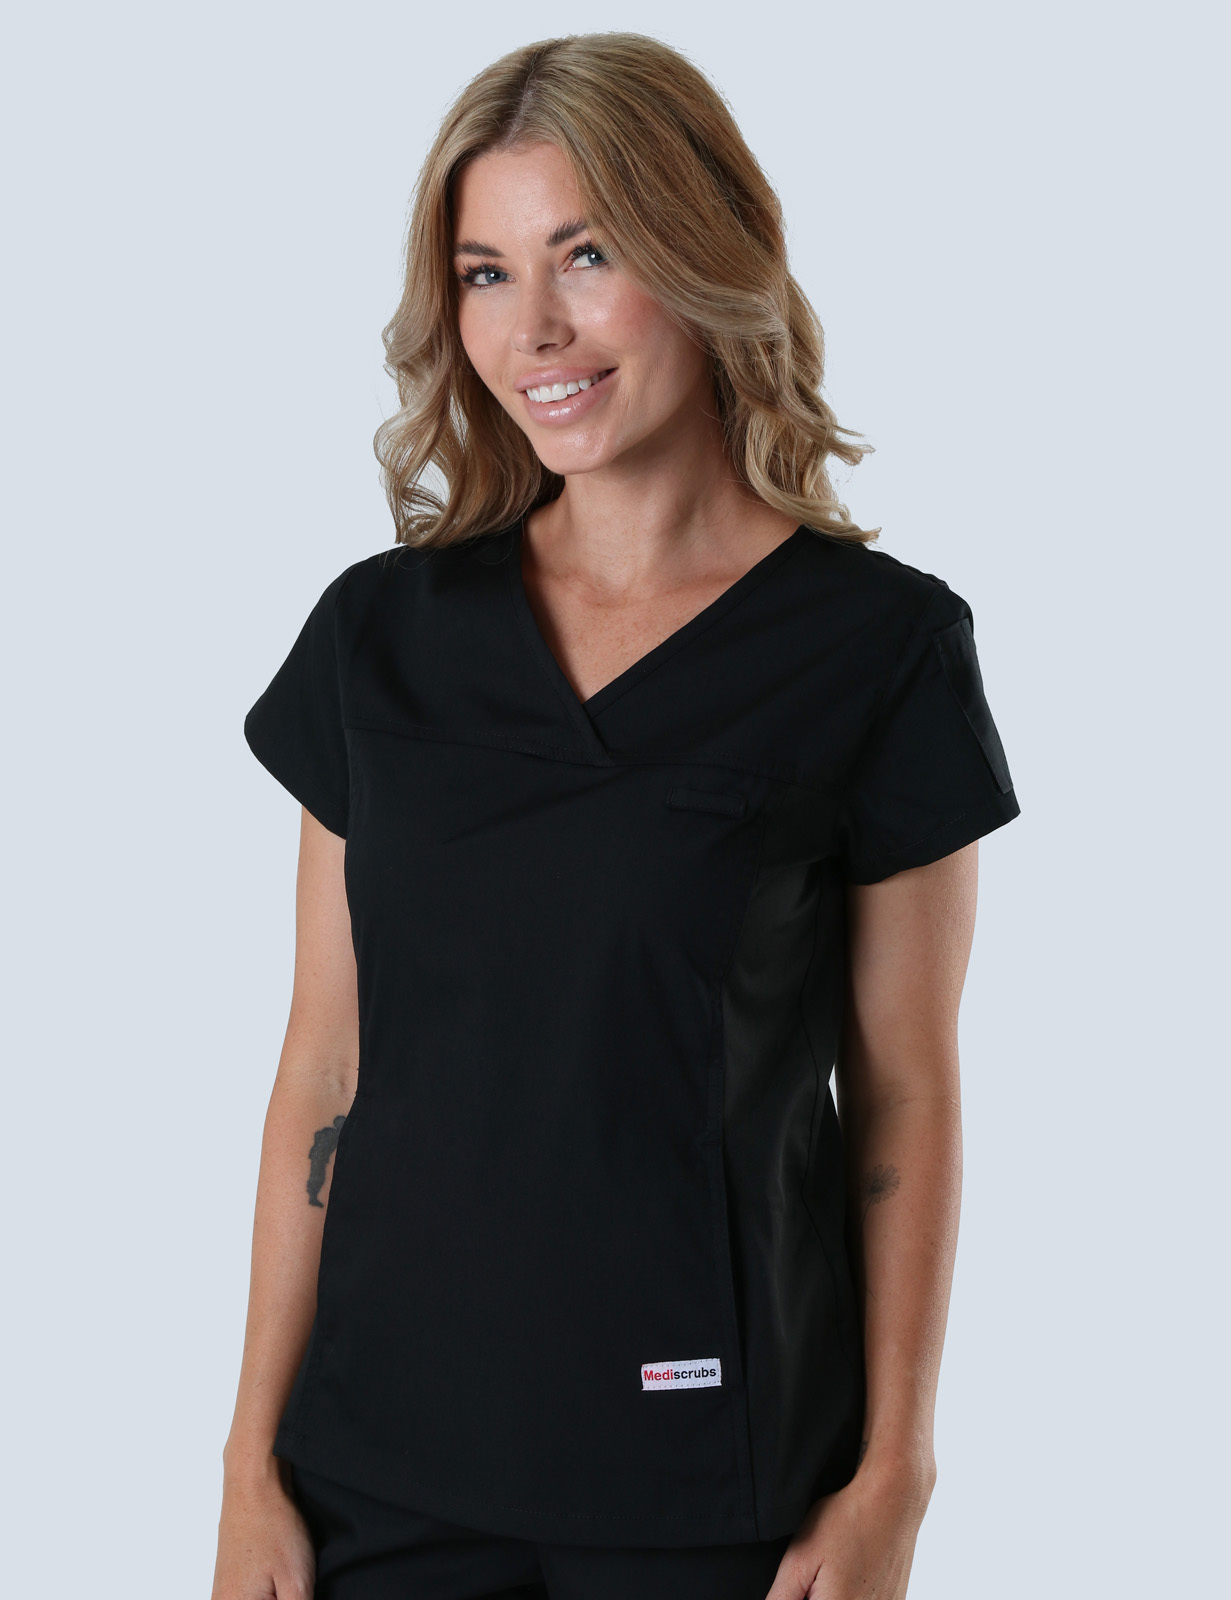 Canberra Hospital Medical Imaging Nuclear Medicine Uniform Top Only Bundle (Women's Fit Spandex  Top in Black + Logos)